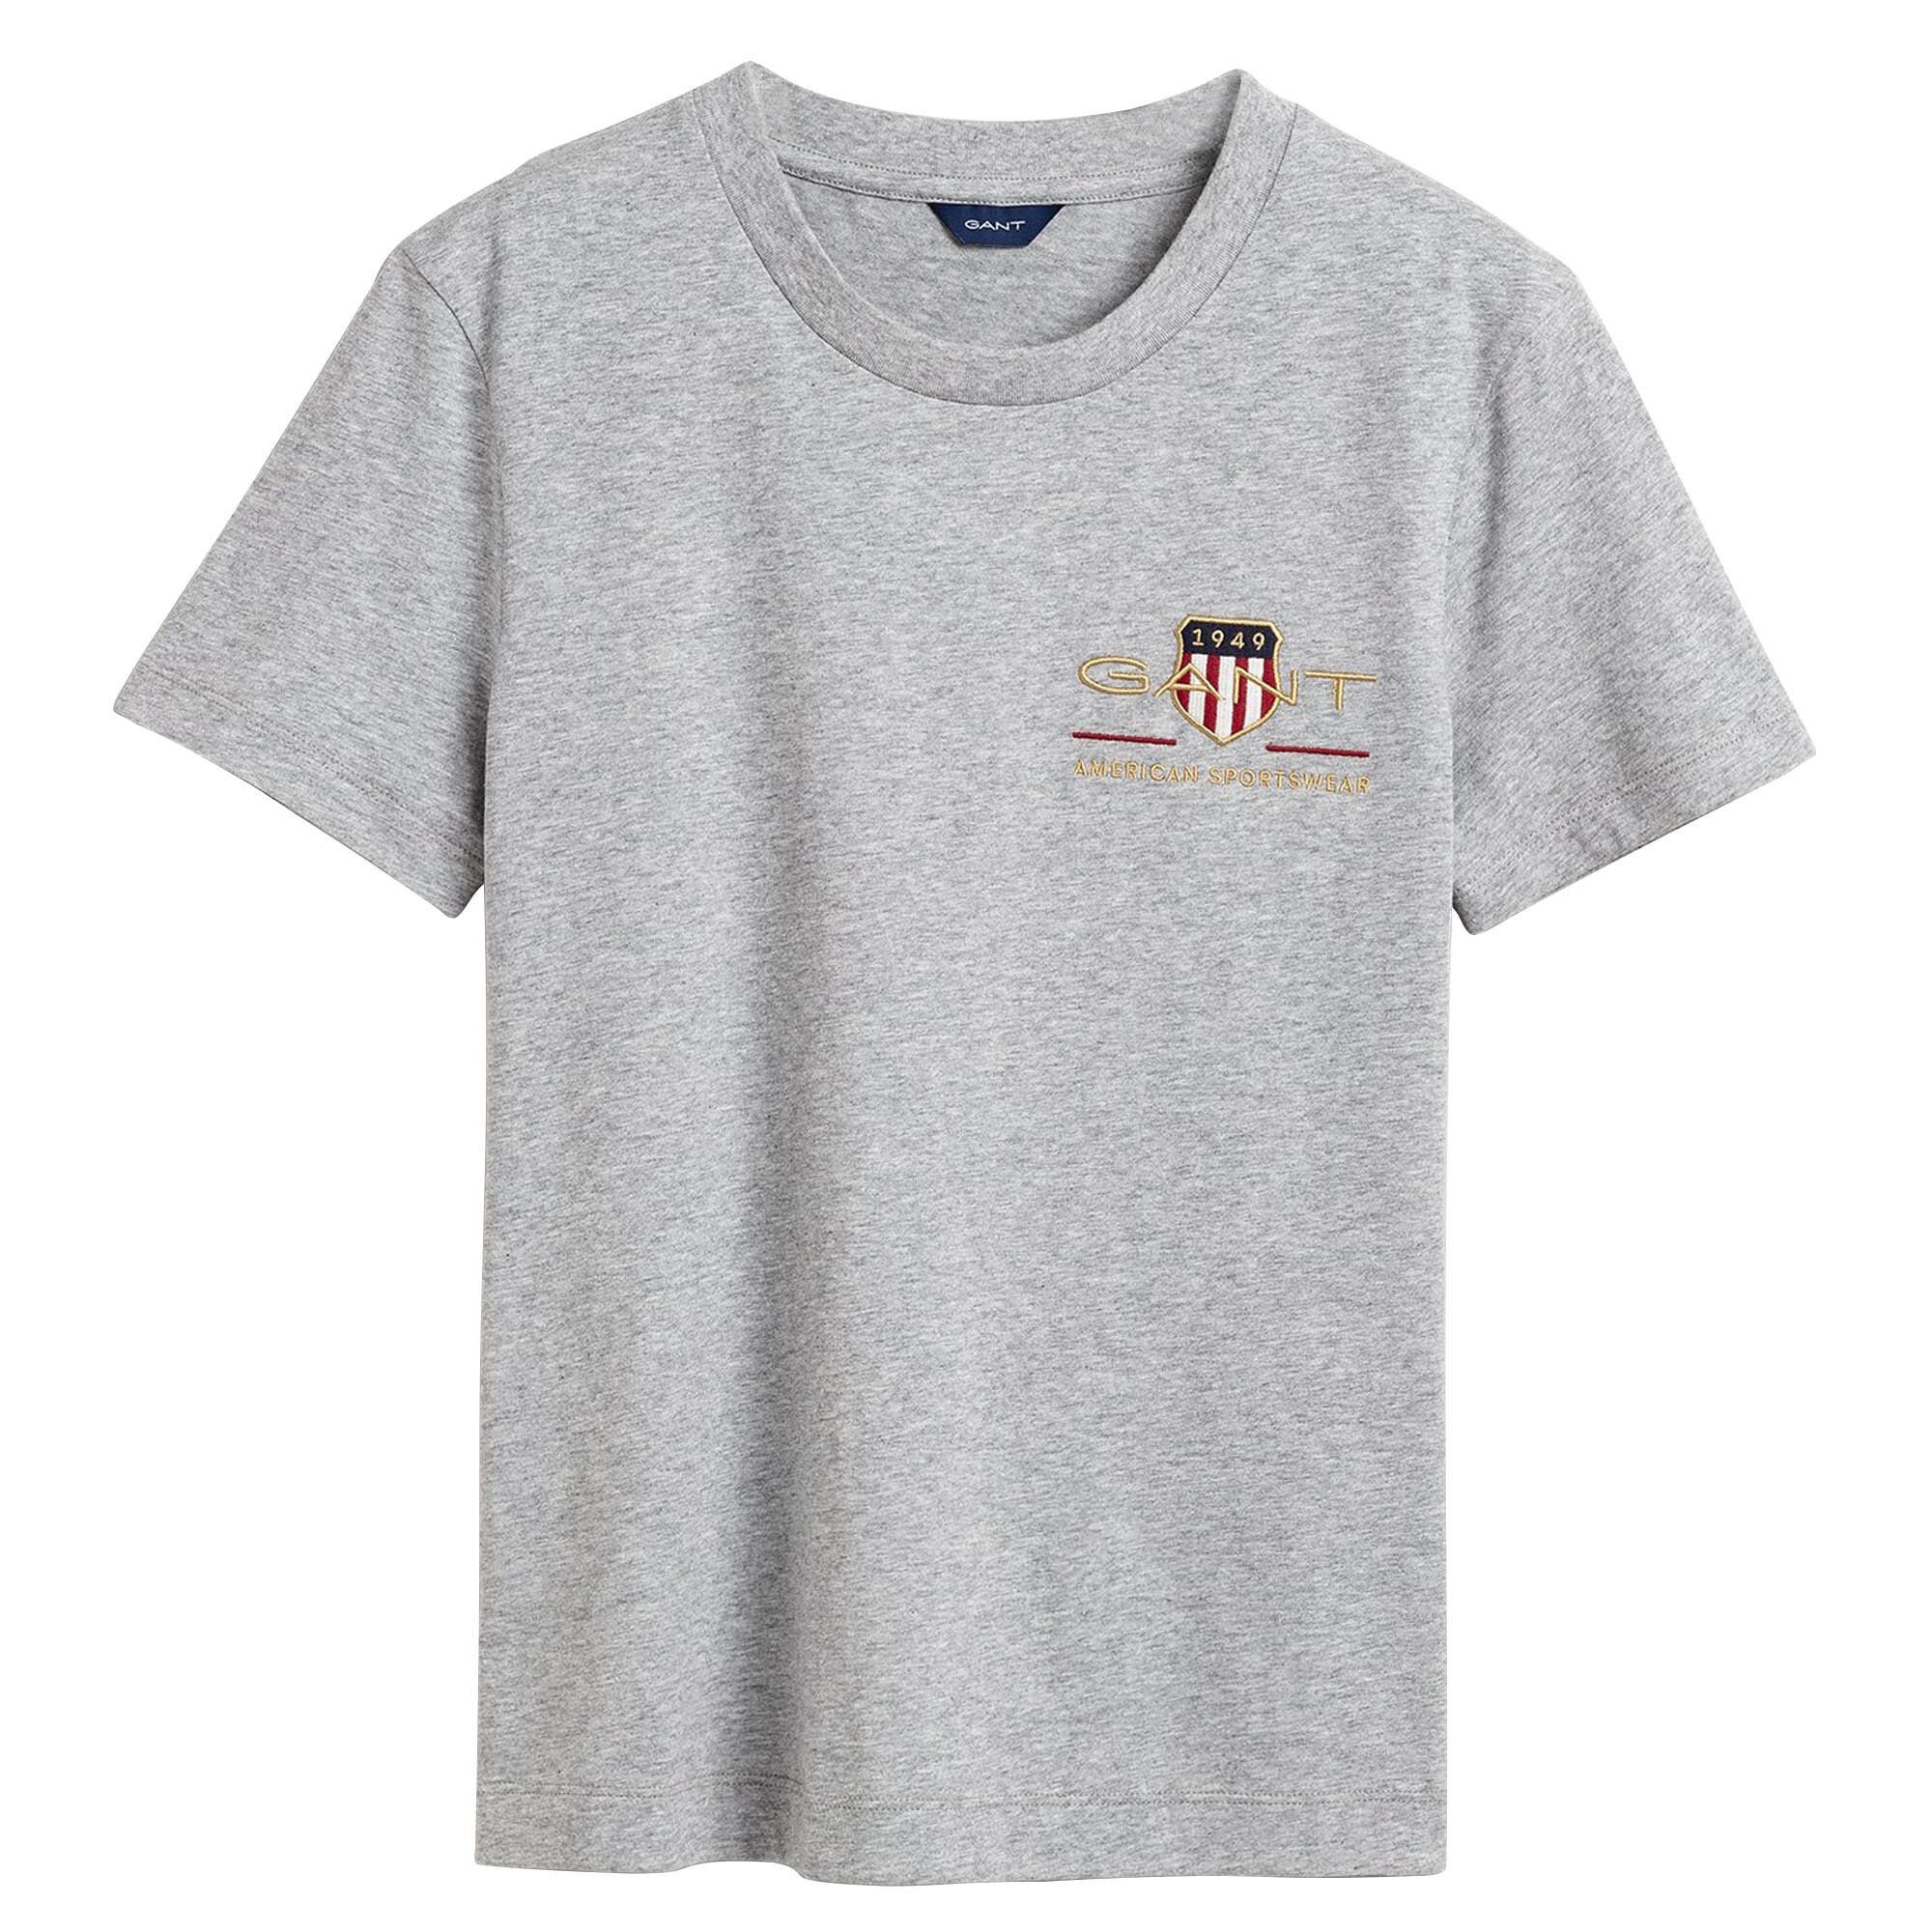 Gant T-Shirt Damen T-Shirt - Archive Shield, Rundhals, kurzarm Grau